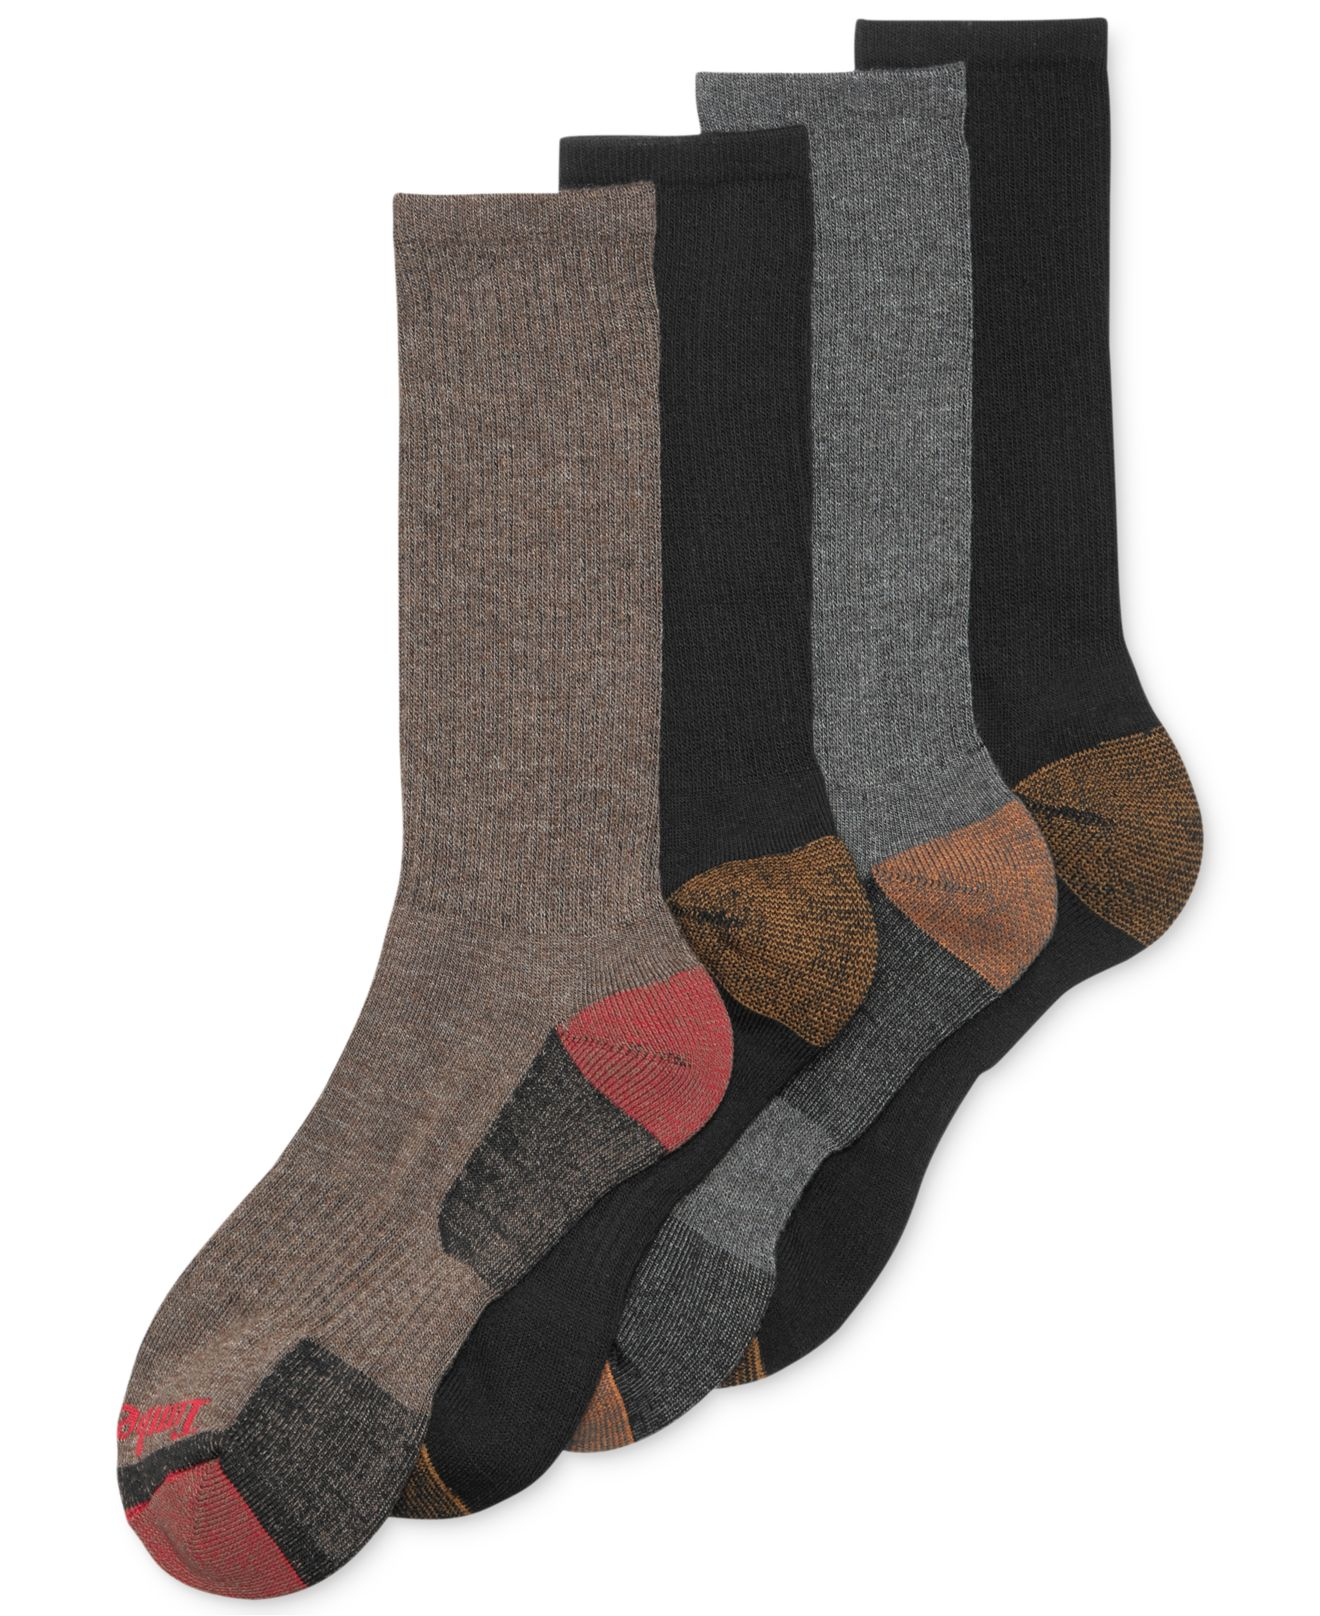 Lyst - Timberland Men's Comfort Crew Socks 4-pack in Gray for Men